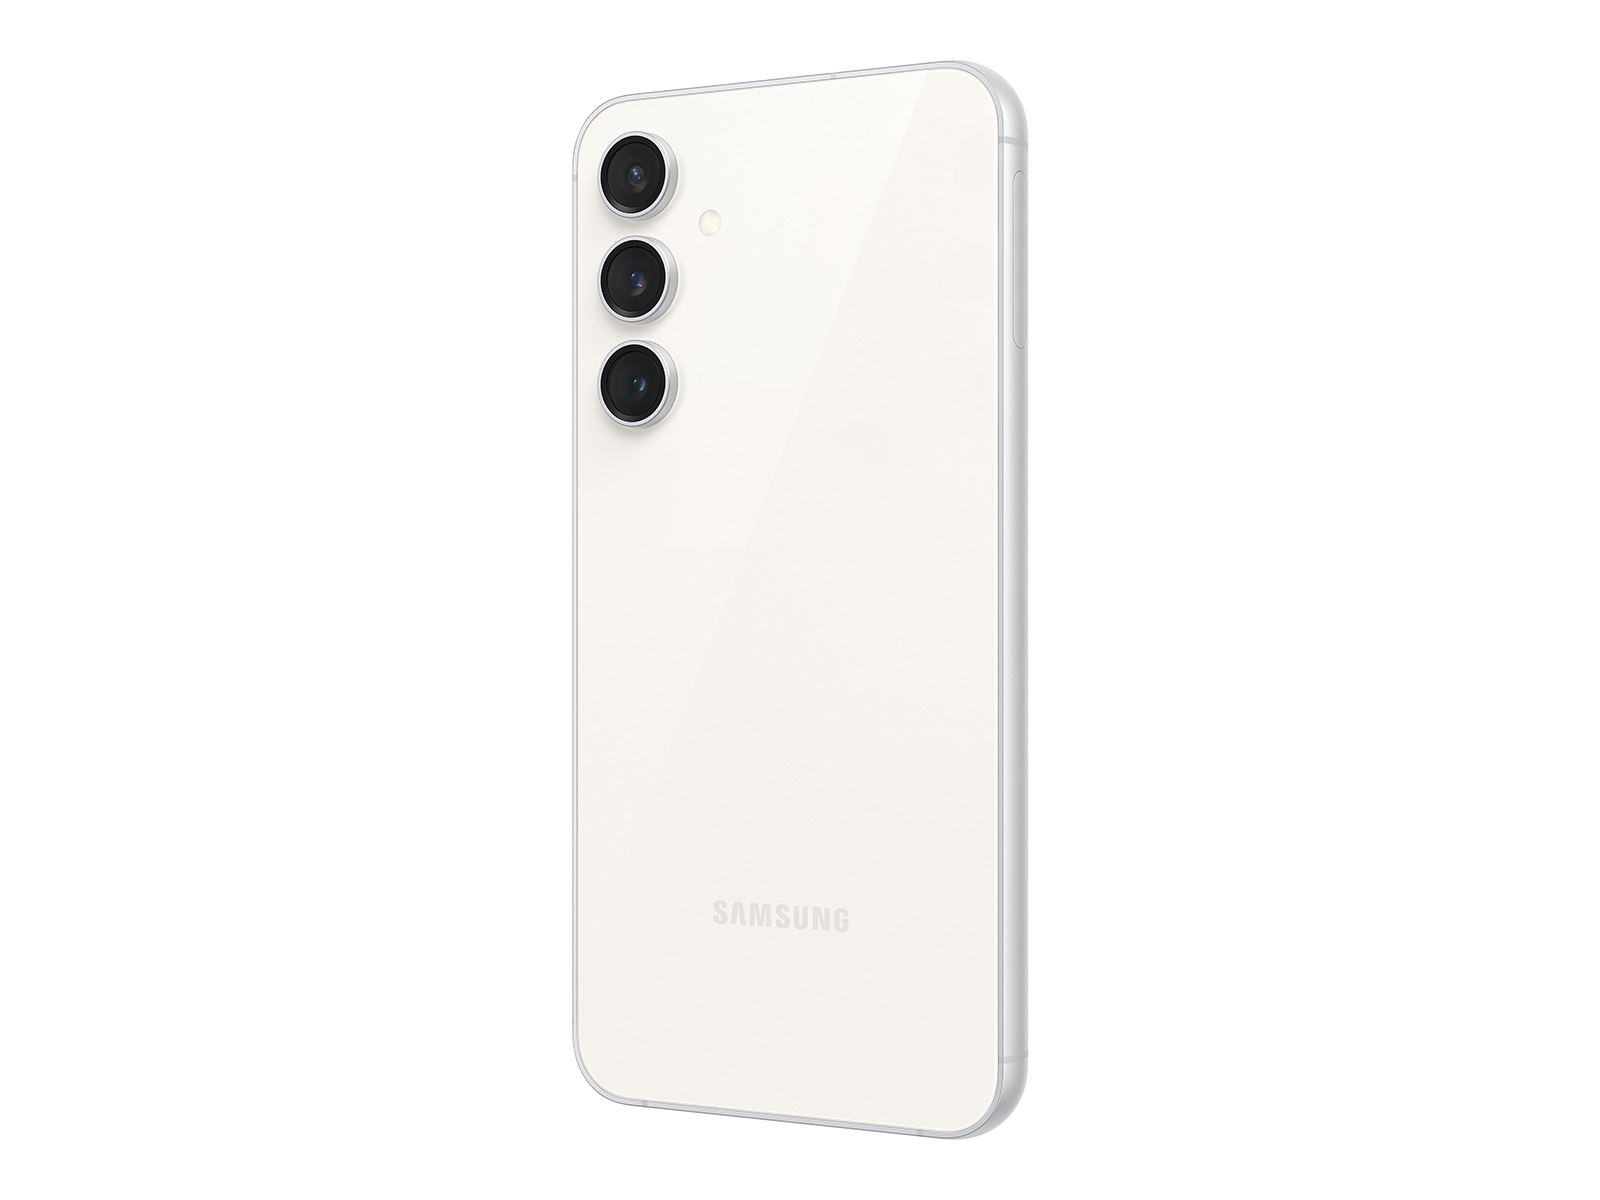 Buy Galaxy S23 FE 128GB (T-Mobile) Phones